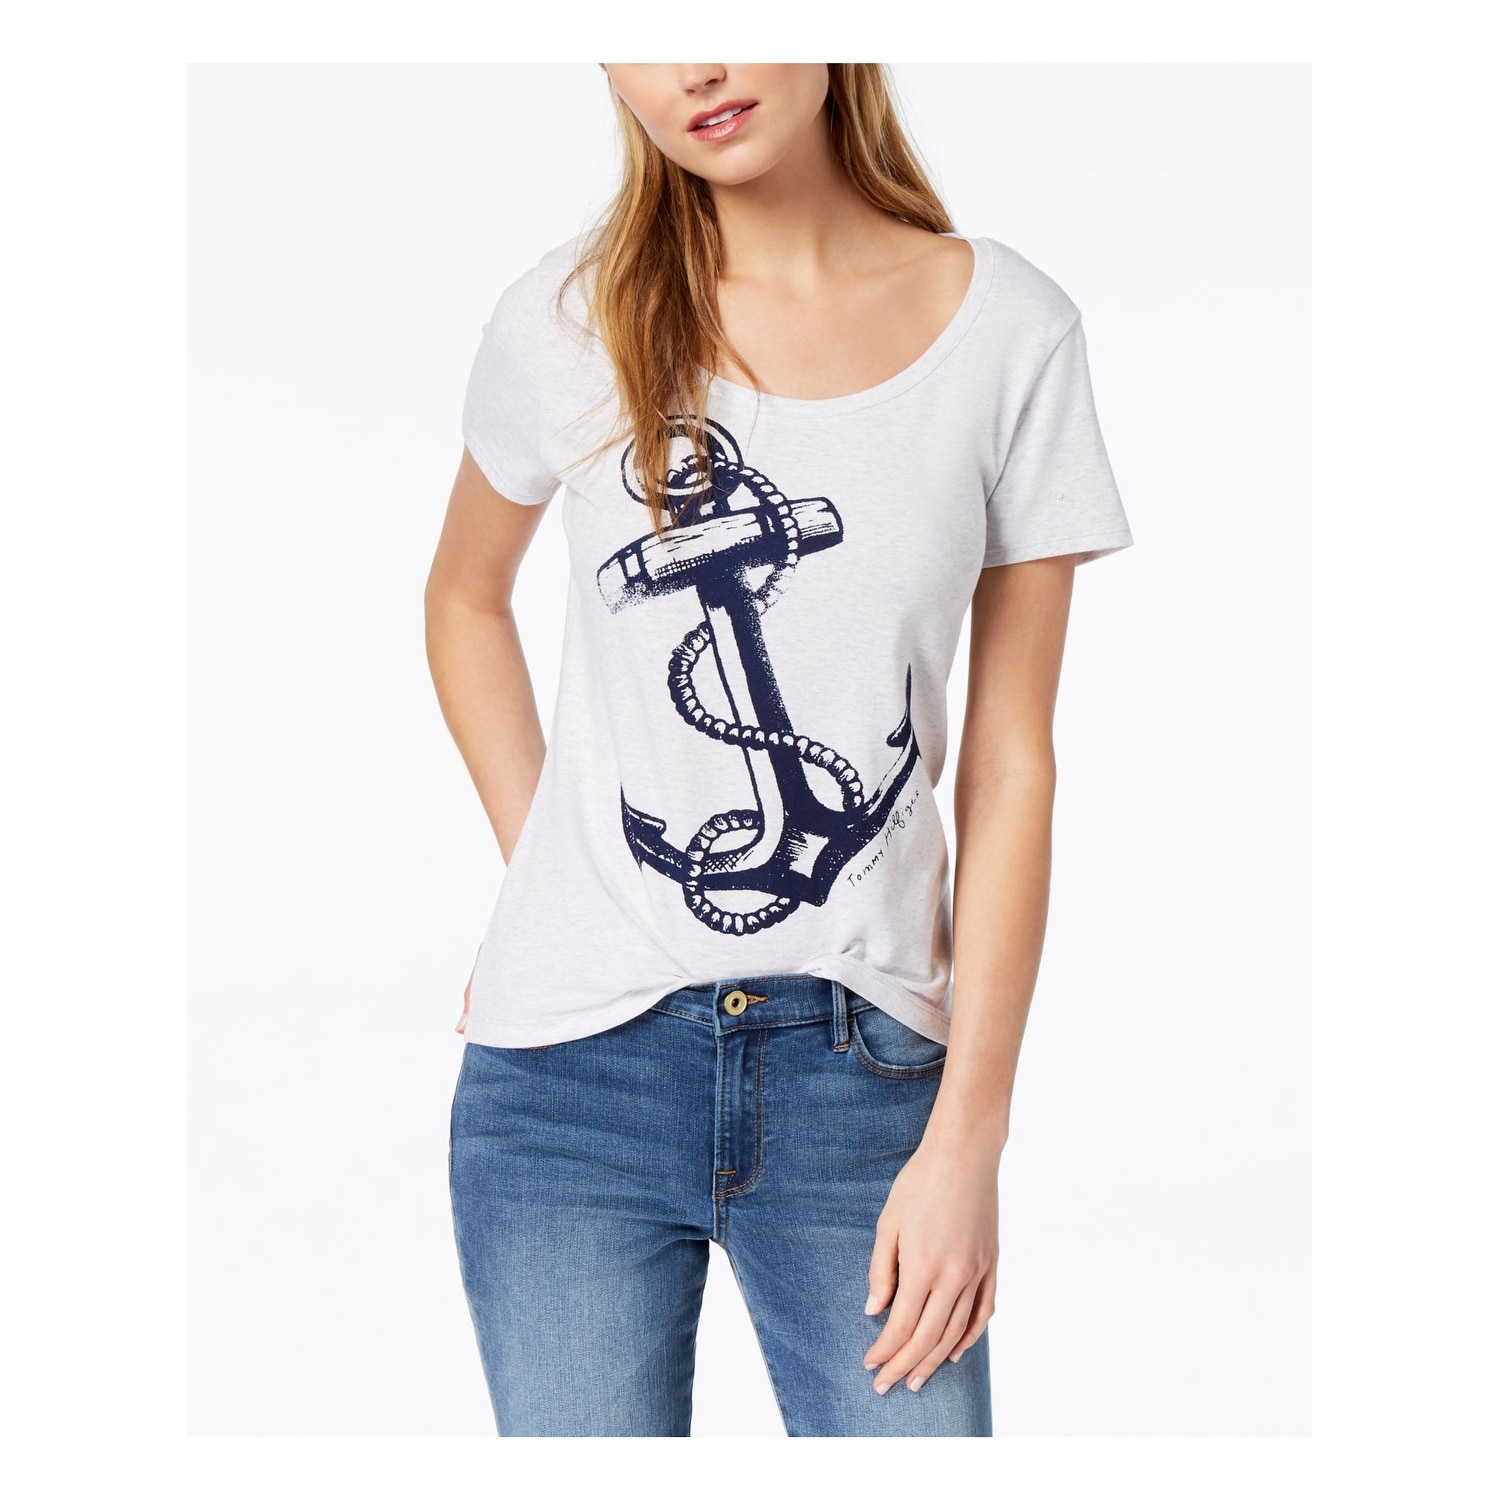 tommy hilfiger anchor shirt